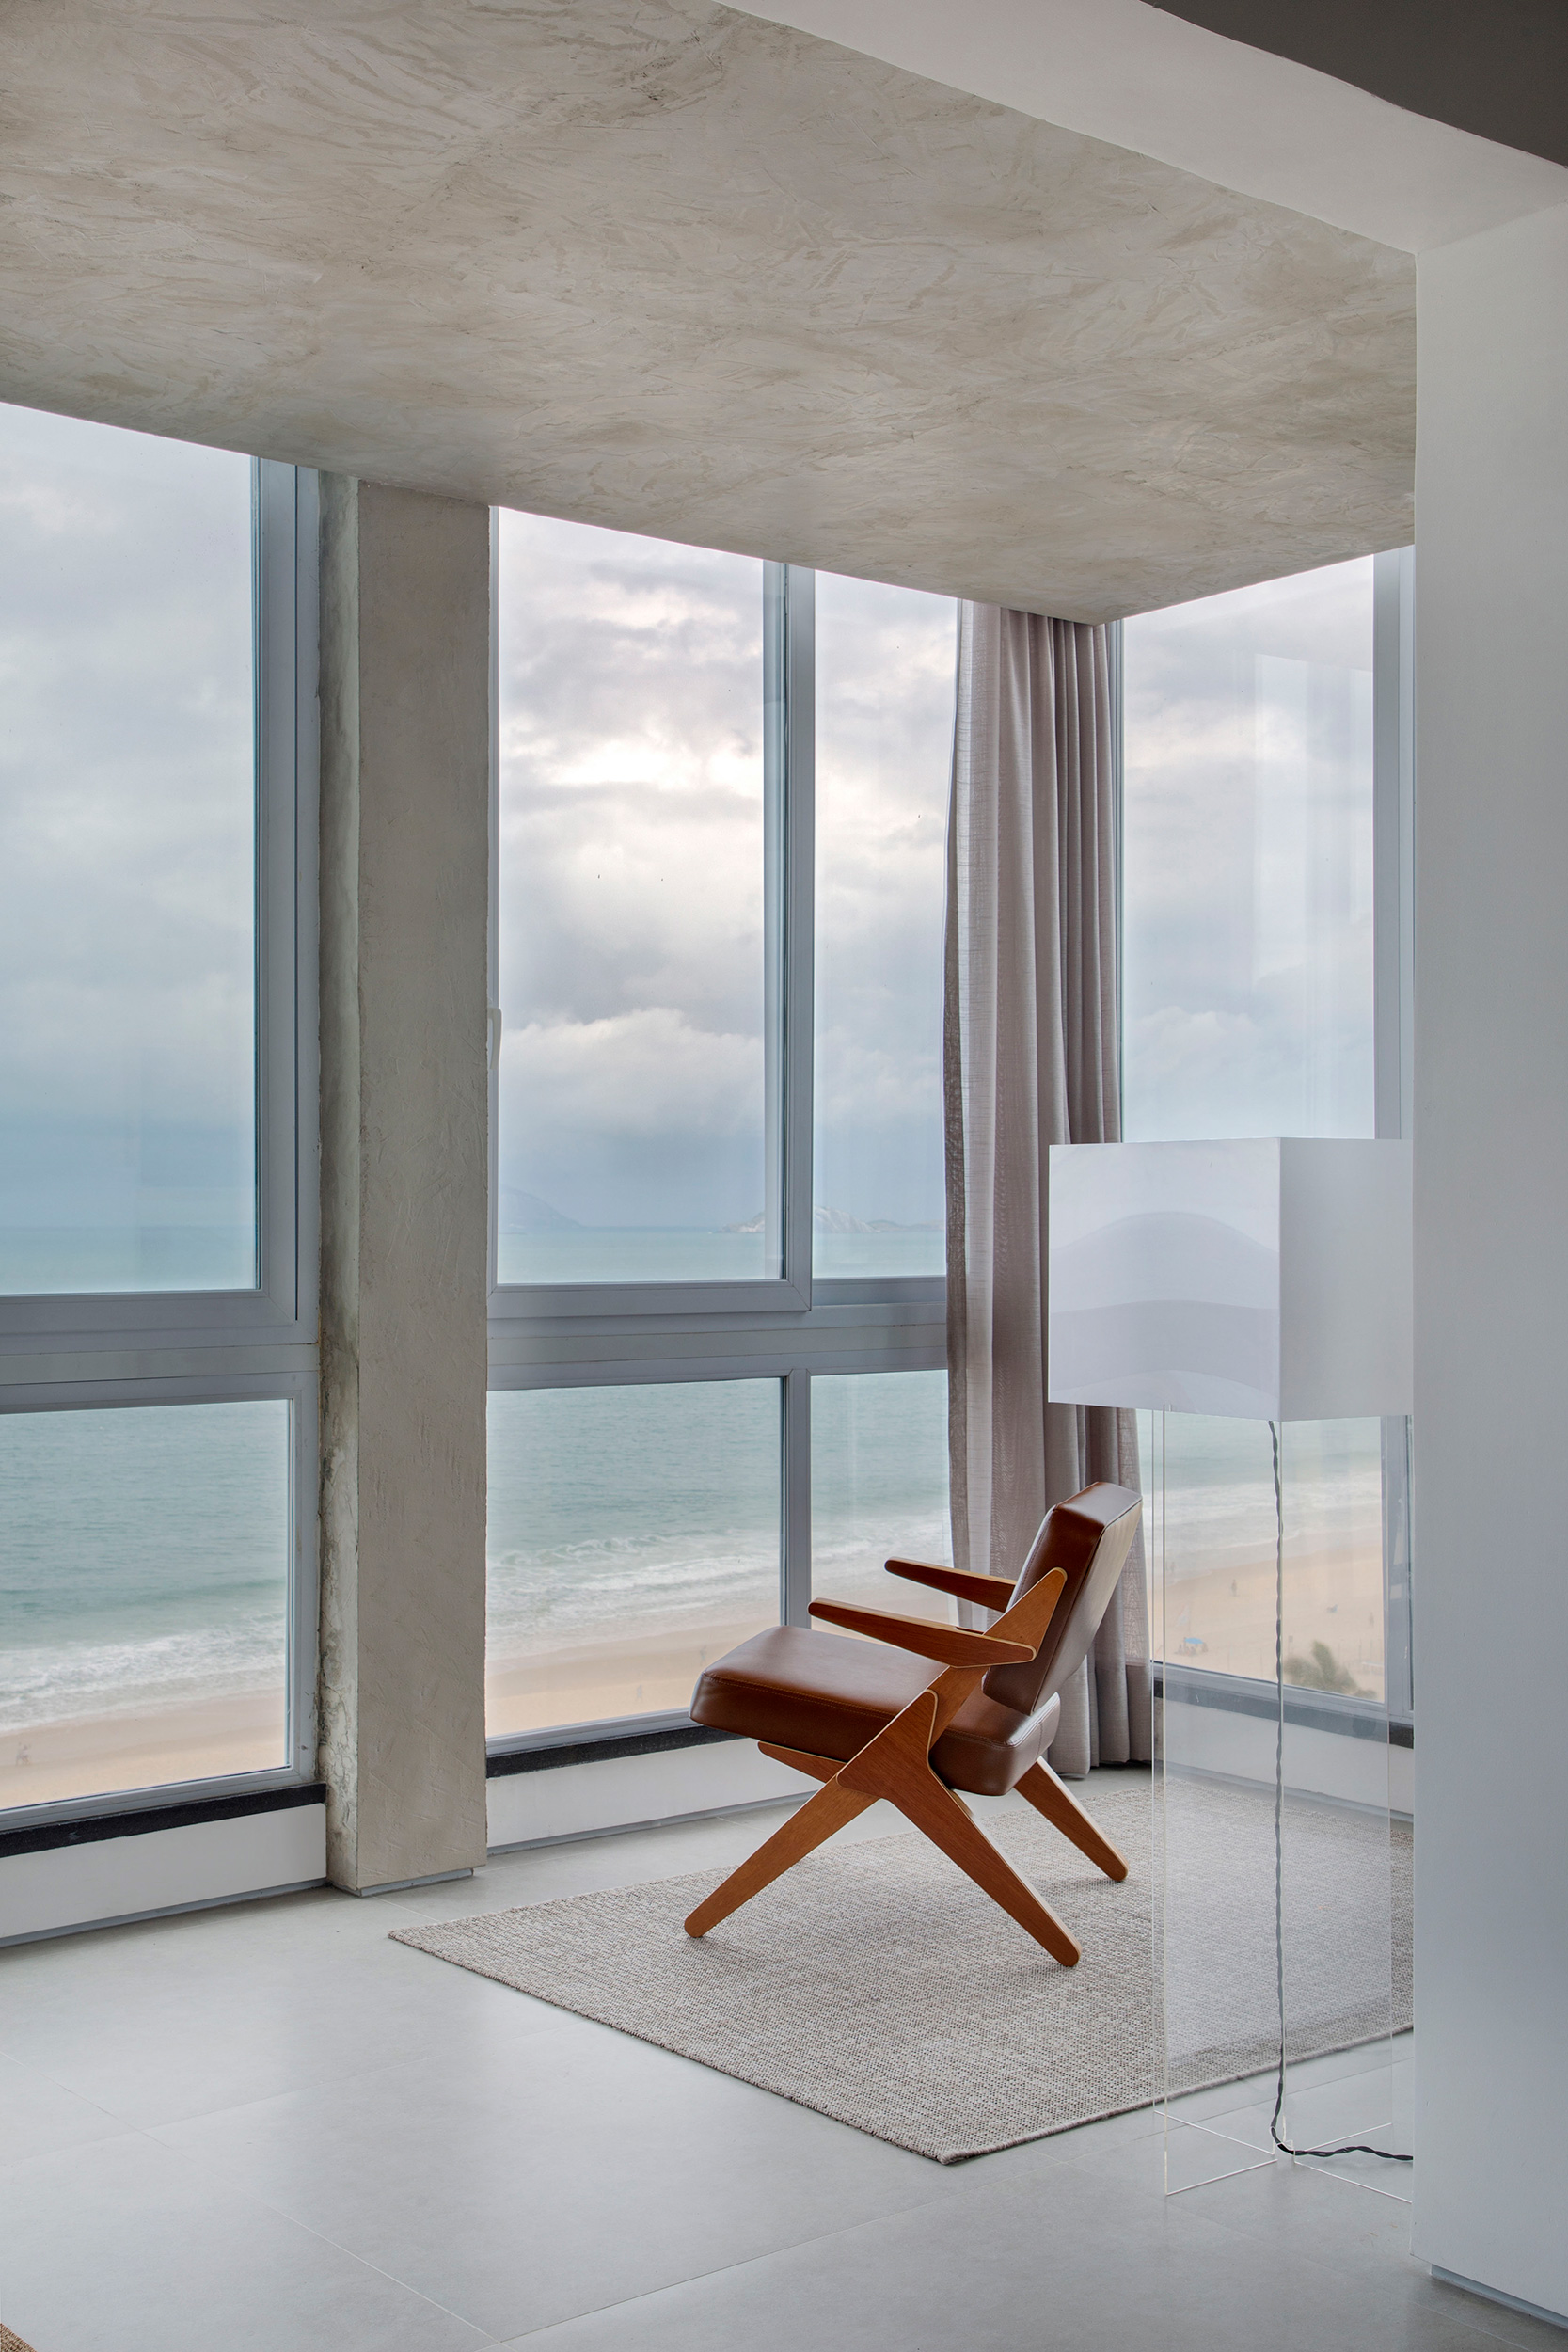 A vista para a praia do Leme é o pano de fundo deste apartamento de 180 m²